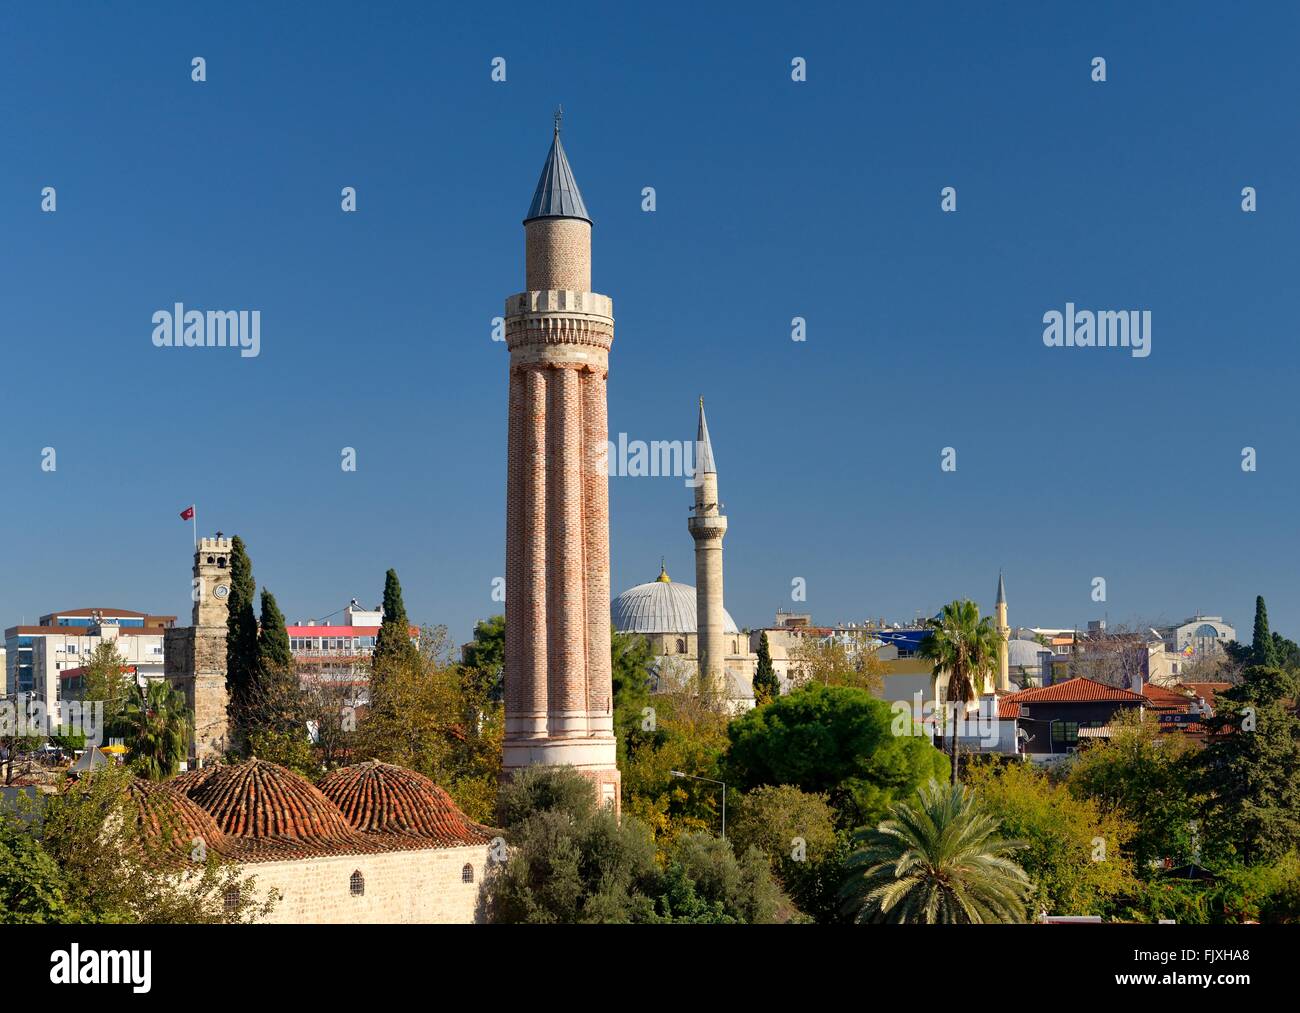 Le pieghe di antica moschea Minareto Yivli aka minare, Alaaddin, Ulu Cami Camii Grand. Kaleici centro storico di Antalya, Turchia Foto Stock